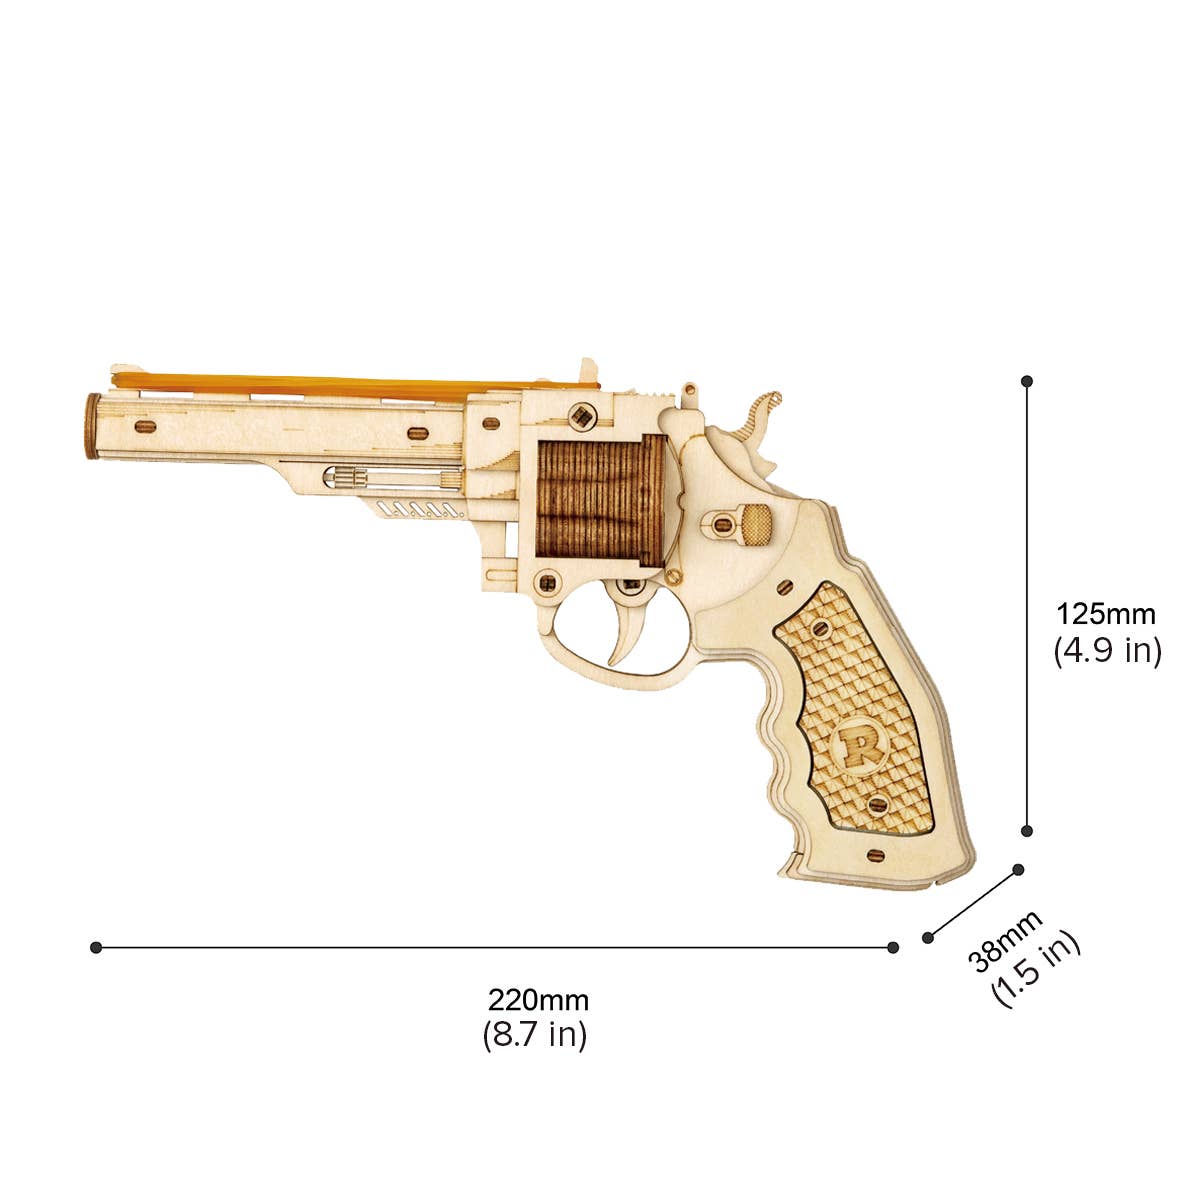 Hands Craft DIY 3D puzzle Rubber Band Gun